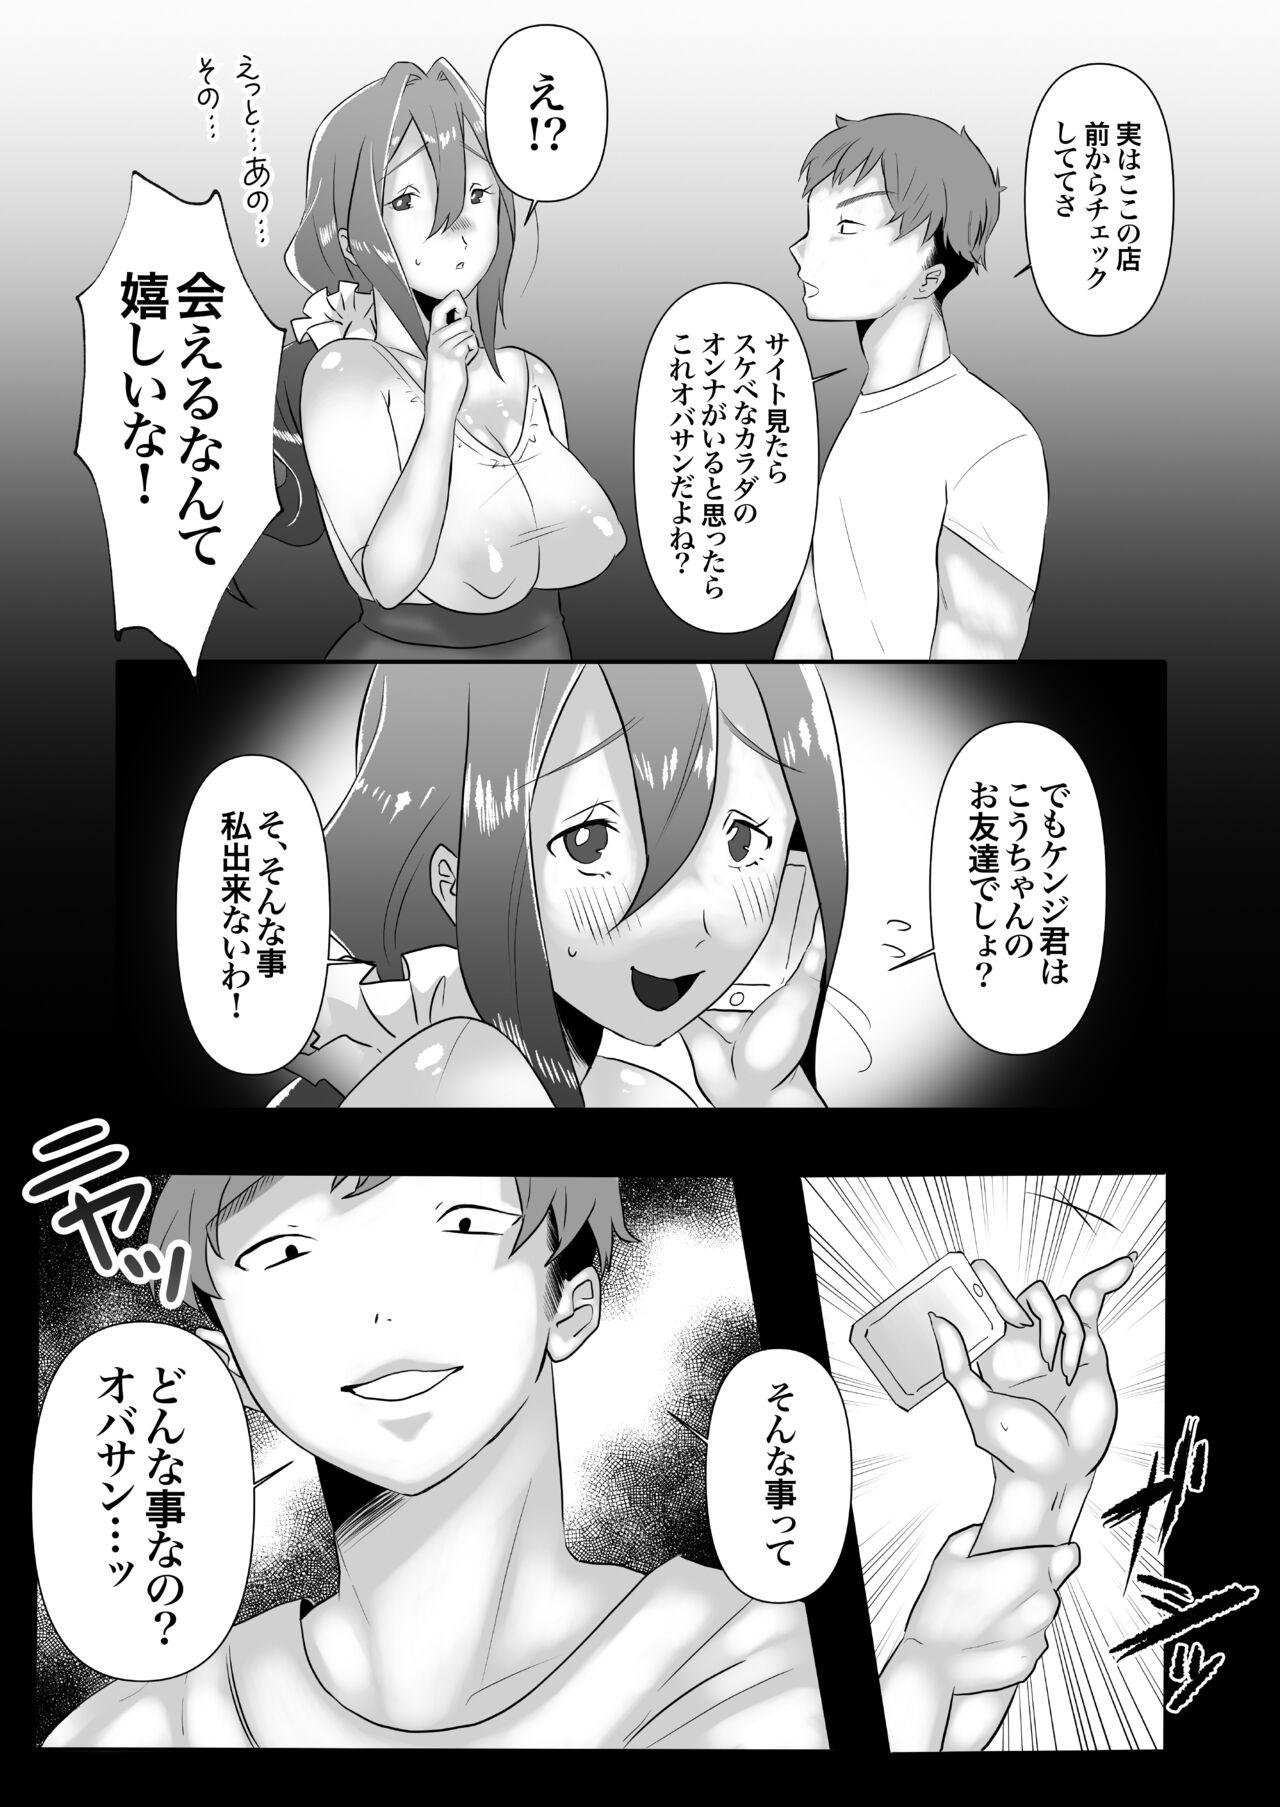 Paja DeliHeal Yondara Tomodachi no Kaa-chan ga Kita. - Original Boobs - Page 9